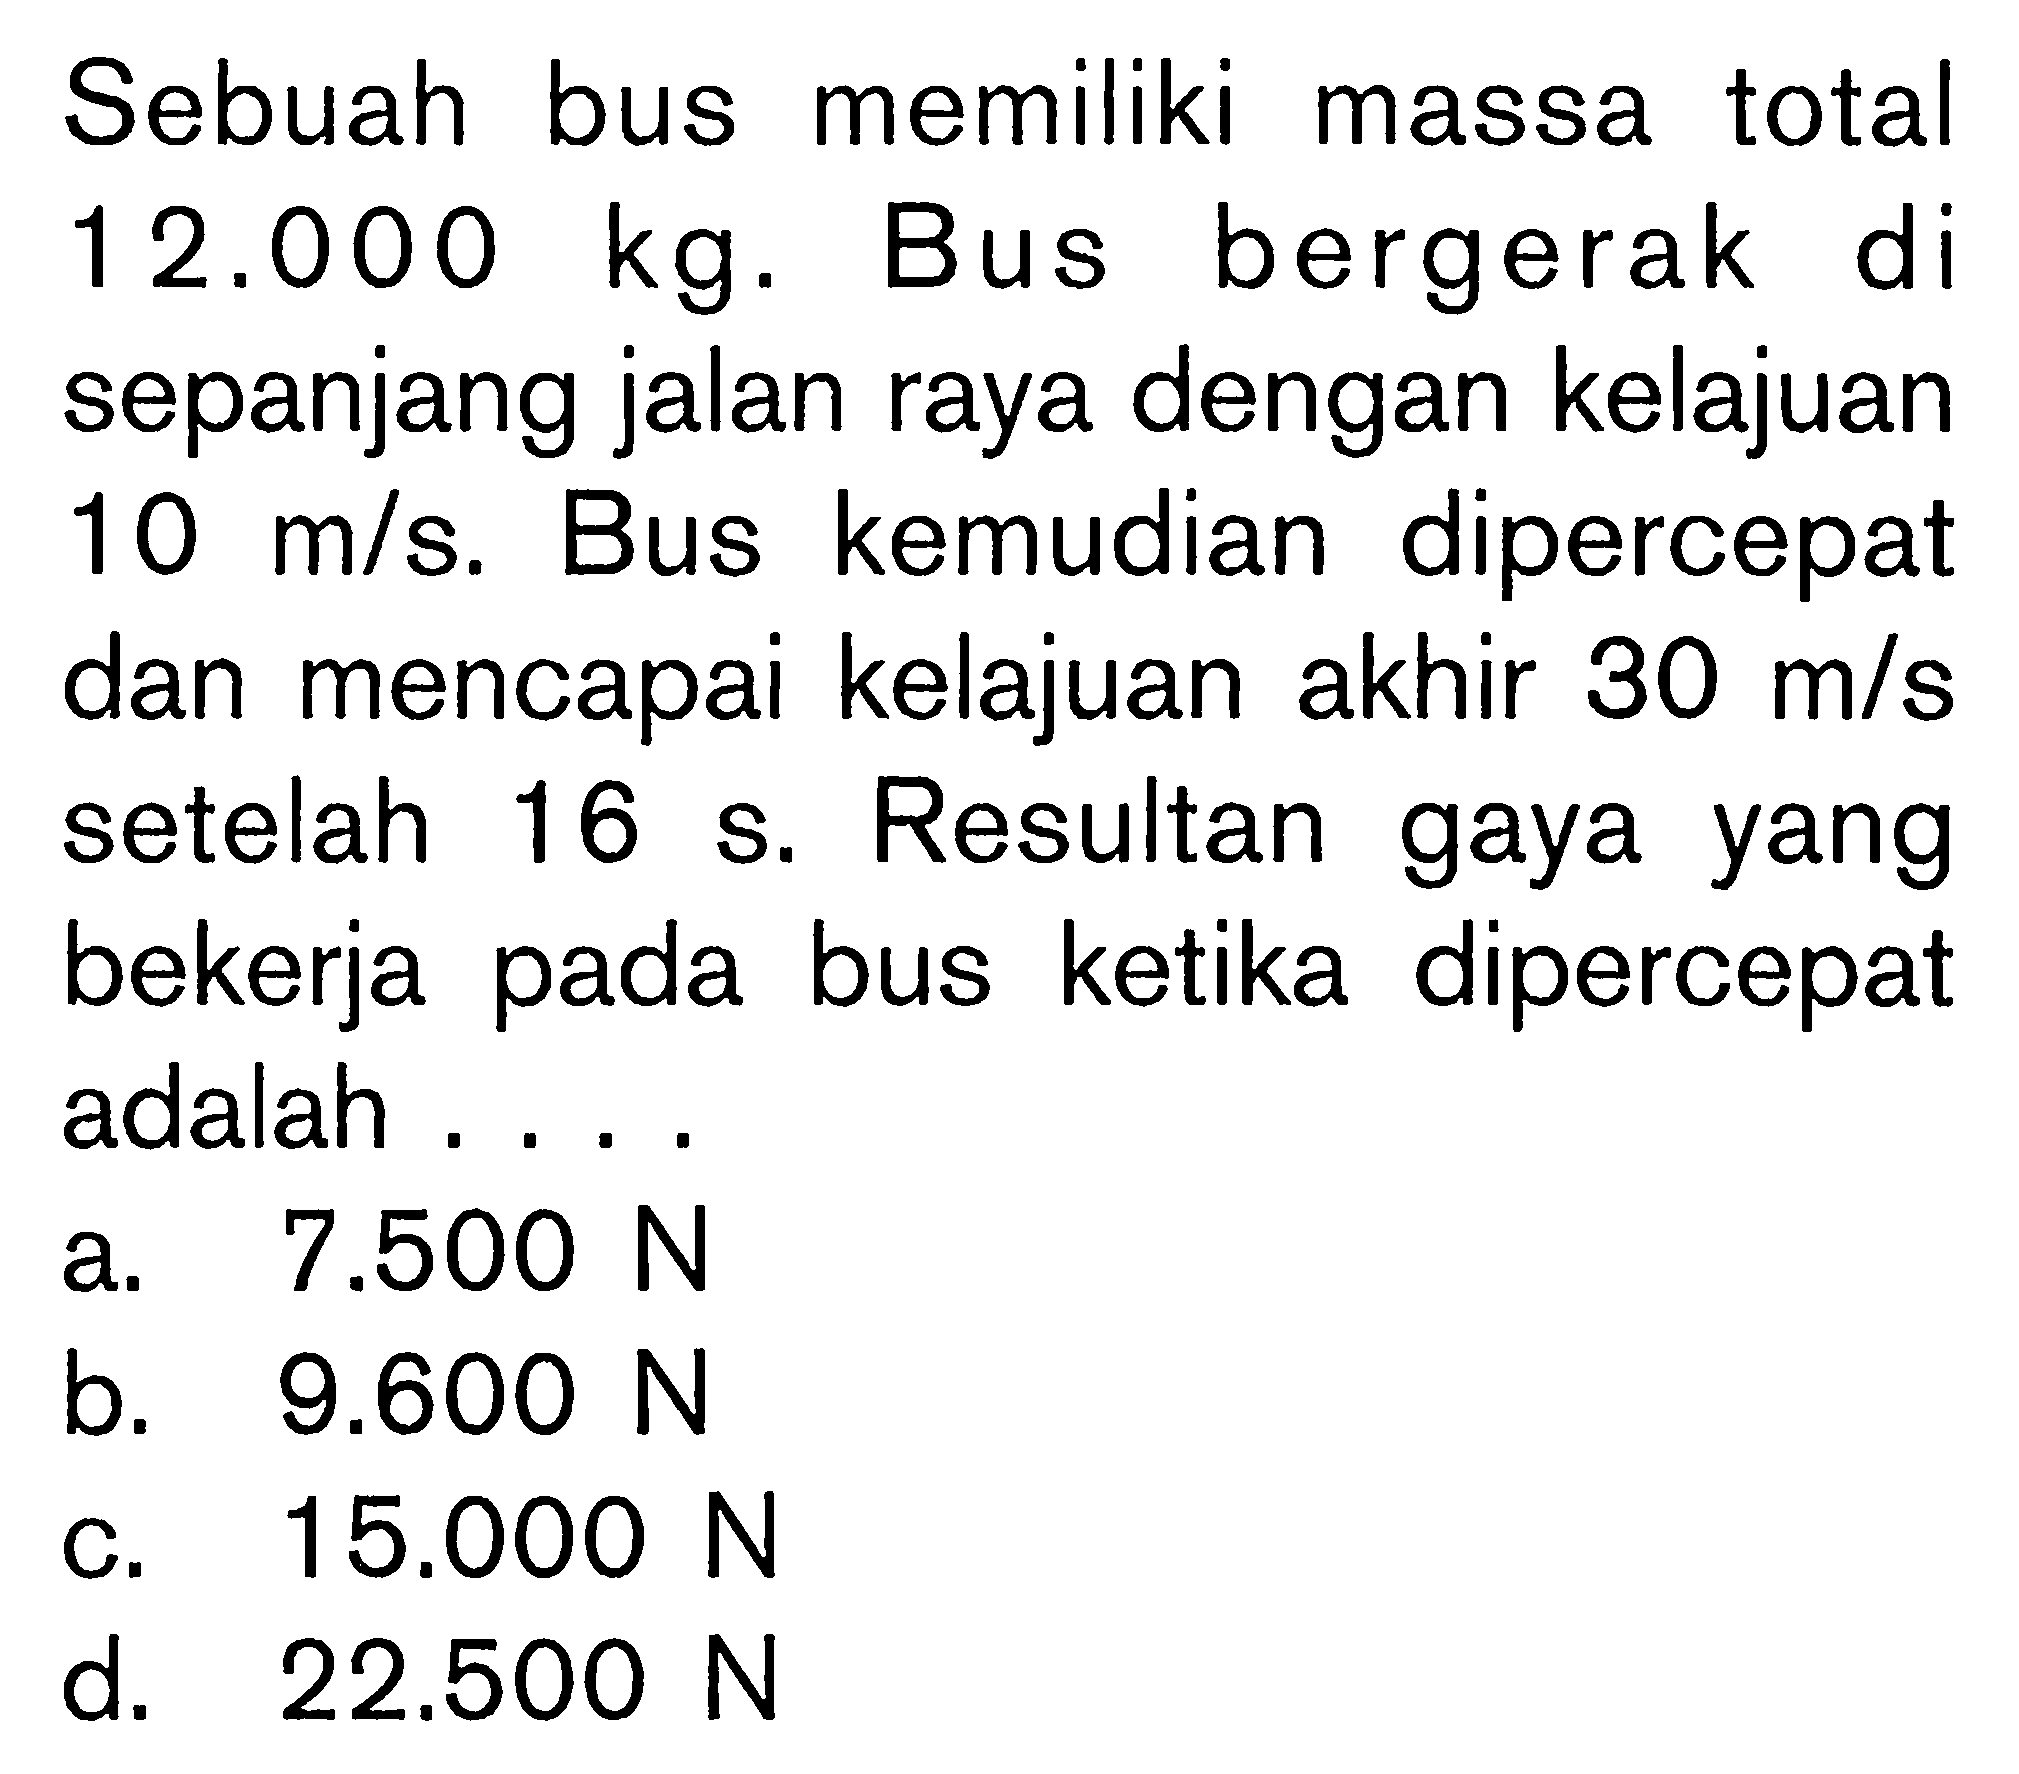 Sebuah bus memiliki massa total 12.000 kg. Bus bergerak di sepanjang jalan raya dengan kelajuan 10 m/s. Bus kemudian dipercepat dan mencapai kelajuan akhir 30 m/s setelah 16 s. Resultan gaya yang bekerja pada bus ketika dipercepat adalah....